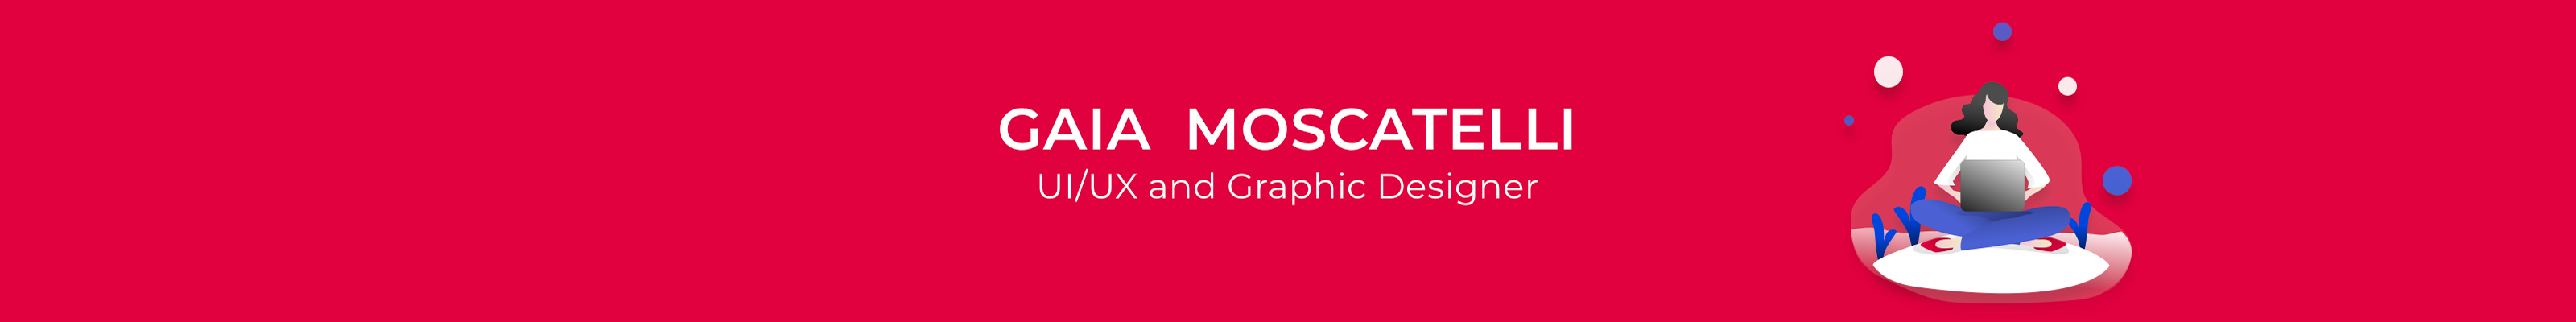 Gaia Moscatelli's profile banner